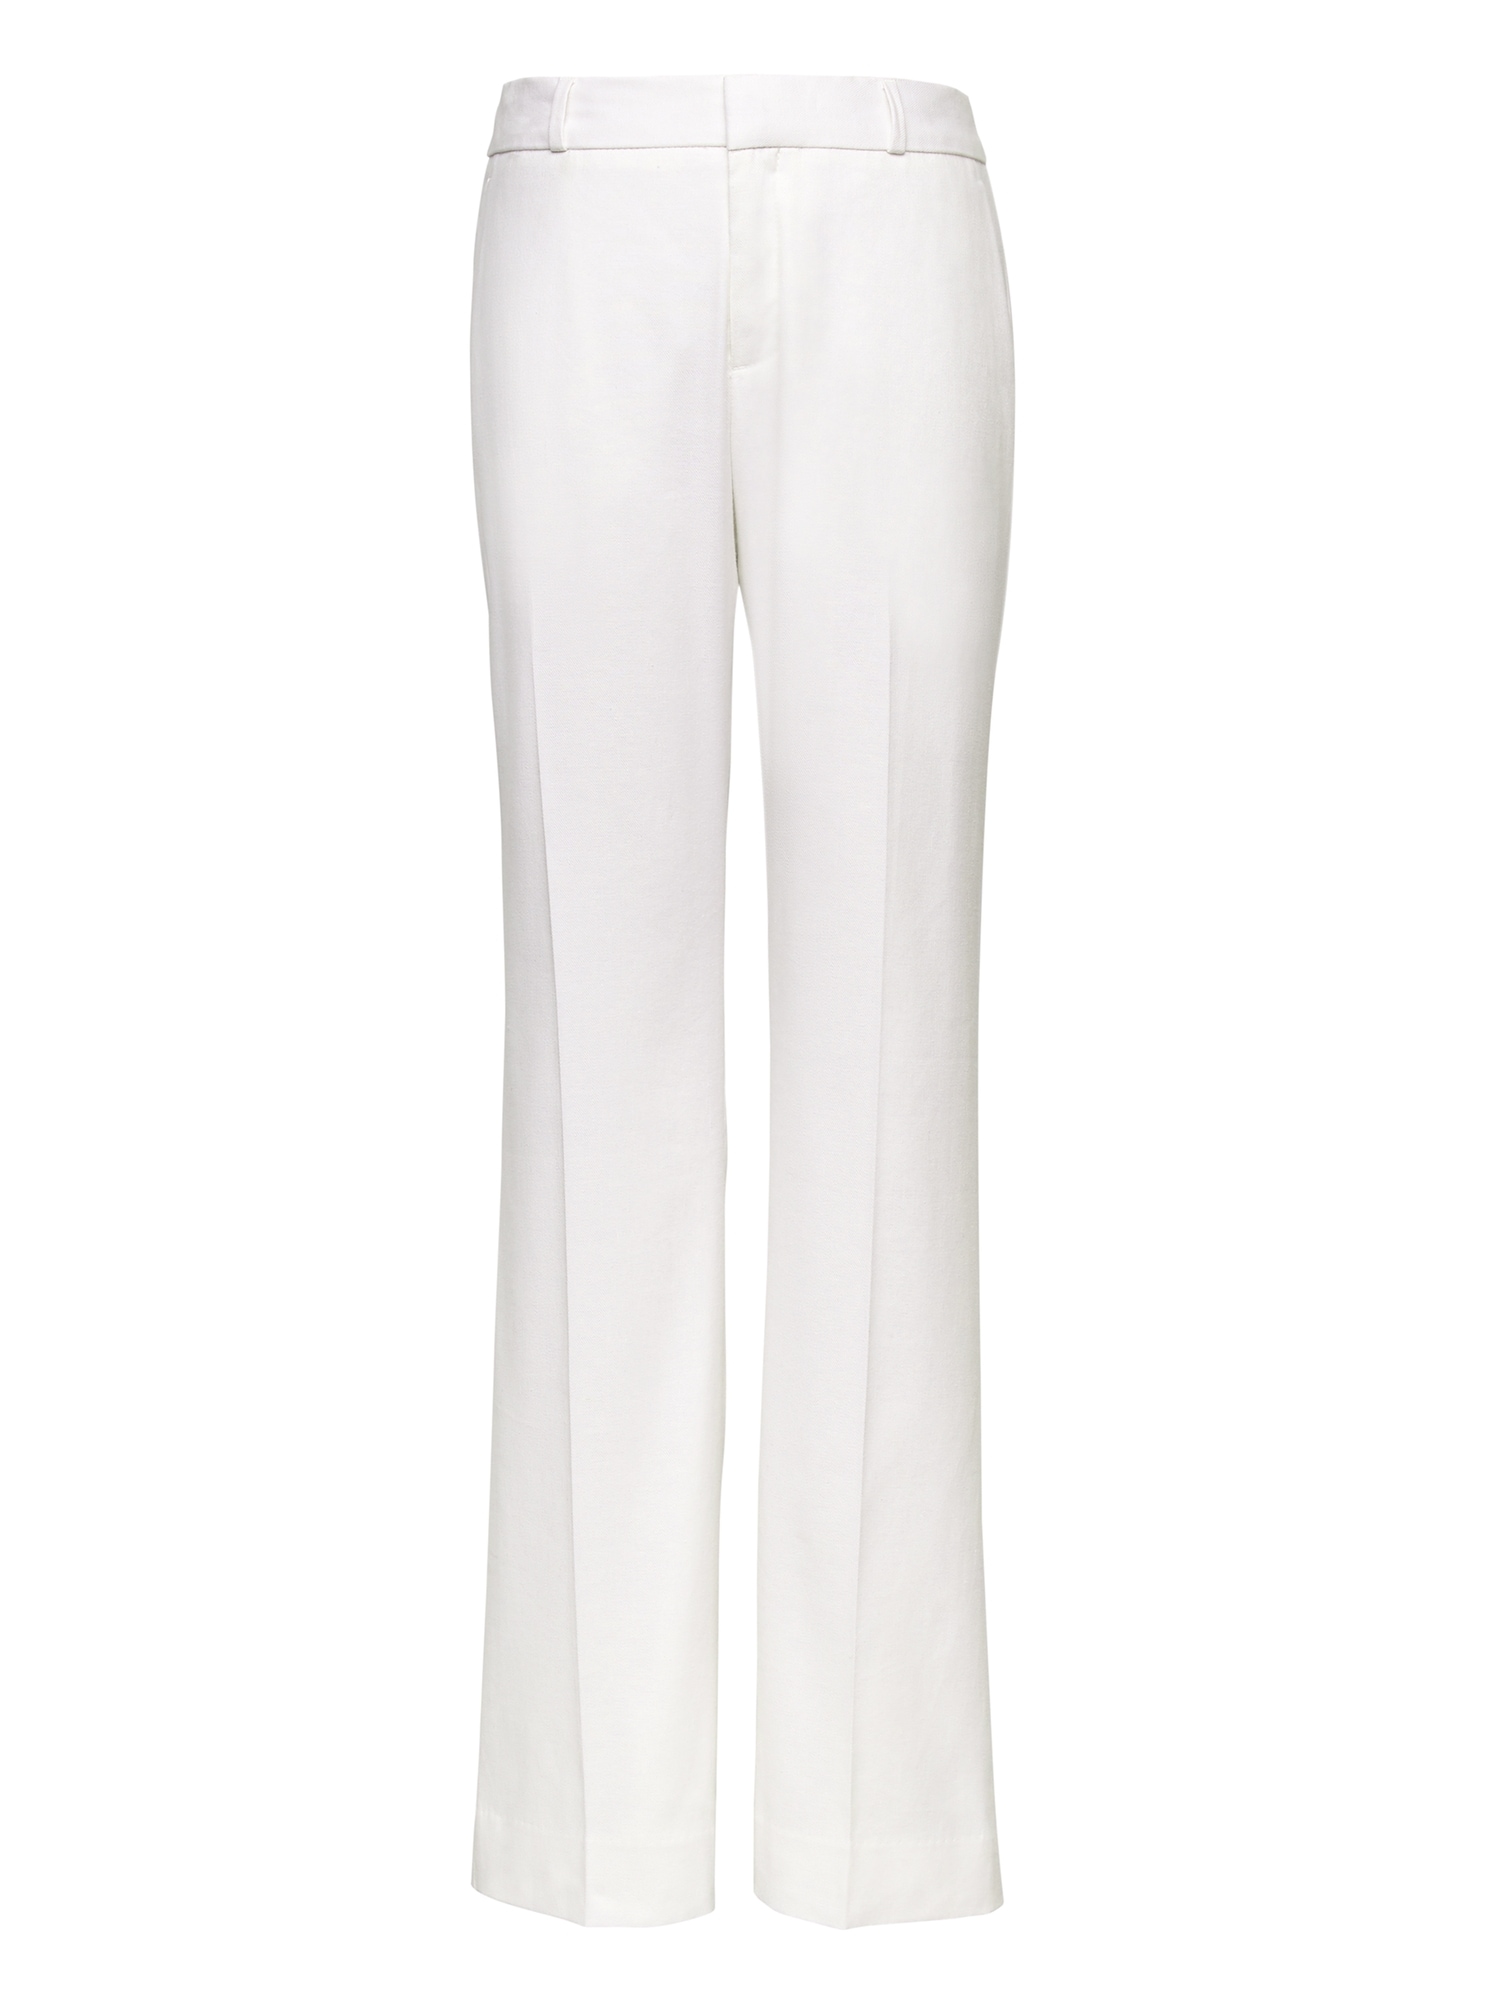 Logan Trouser-Fit Stretch Linen-Cotton Pant | Banana Republic